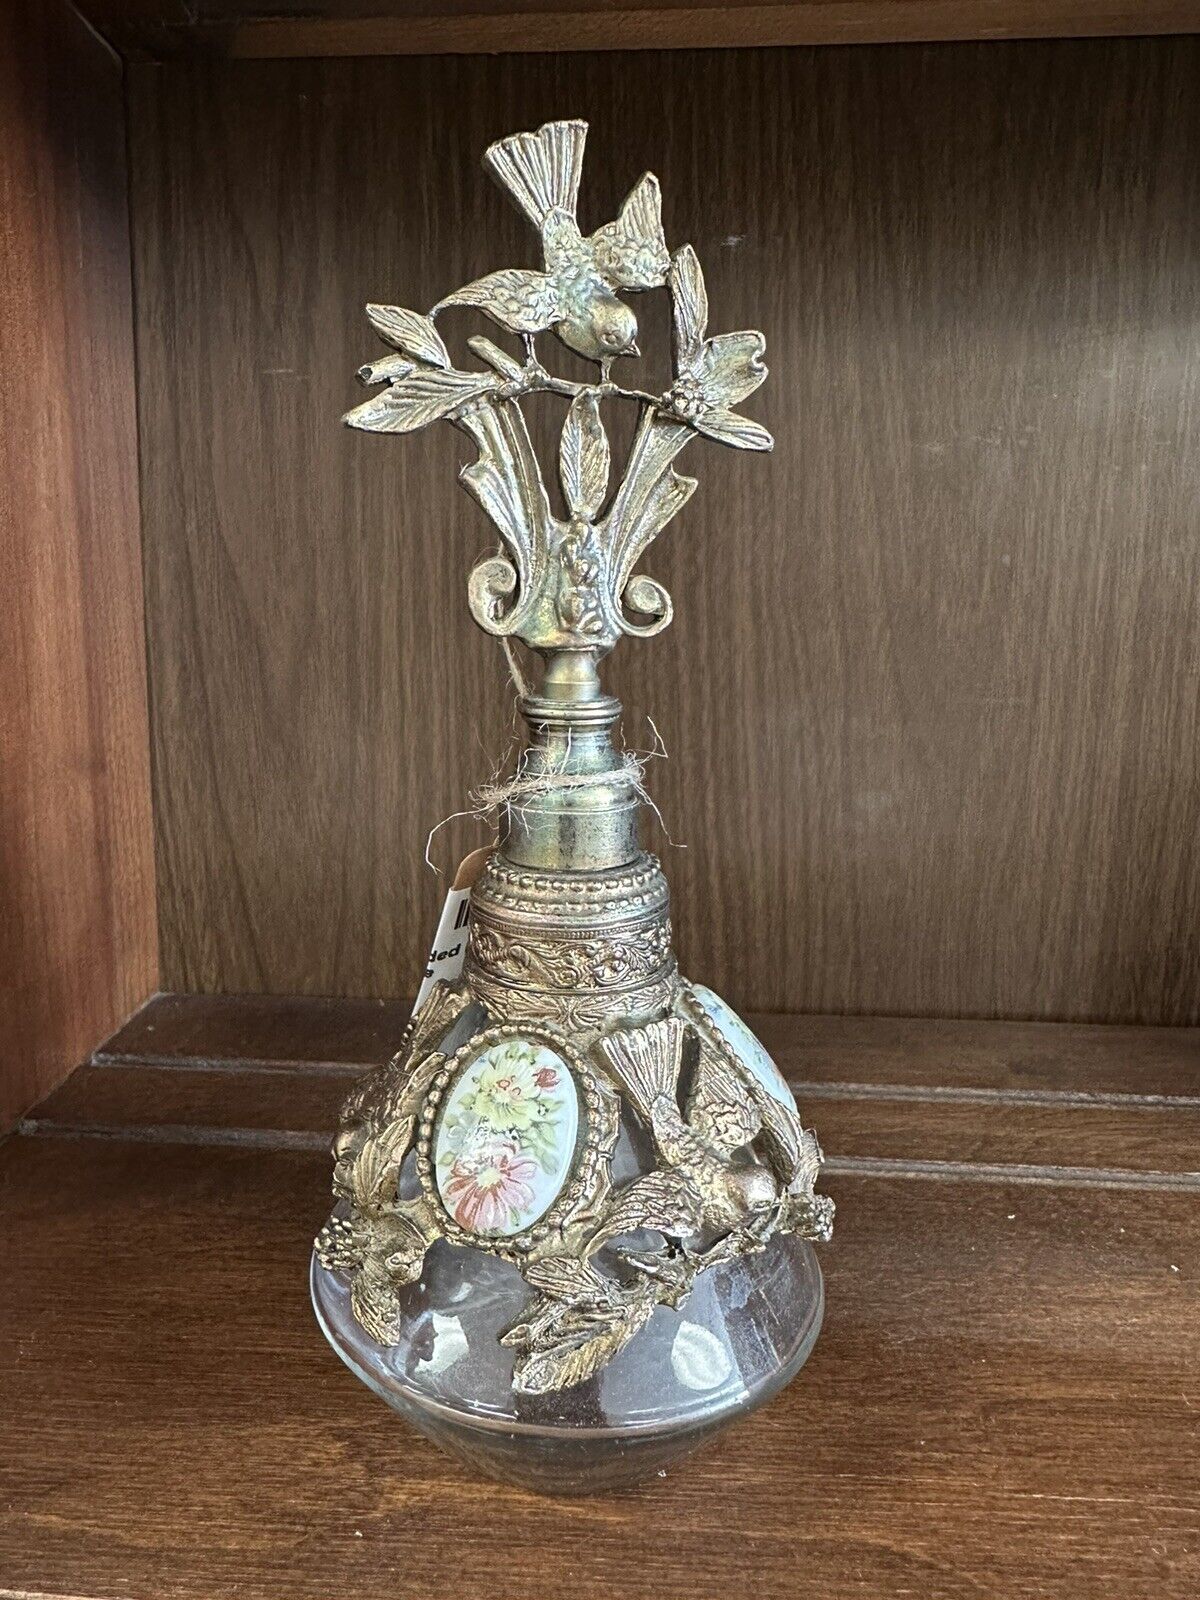 Vintage ormolu bird flowers perfume bottle with glass dauber